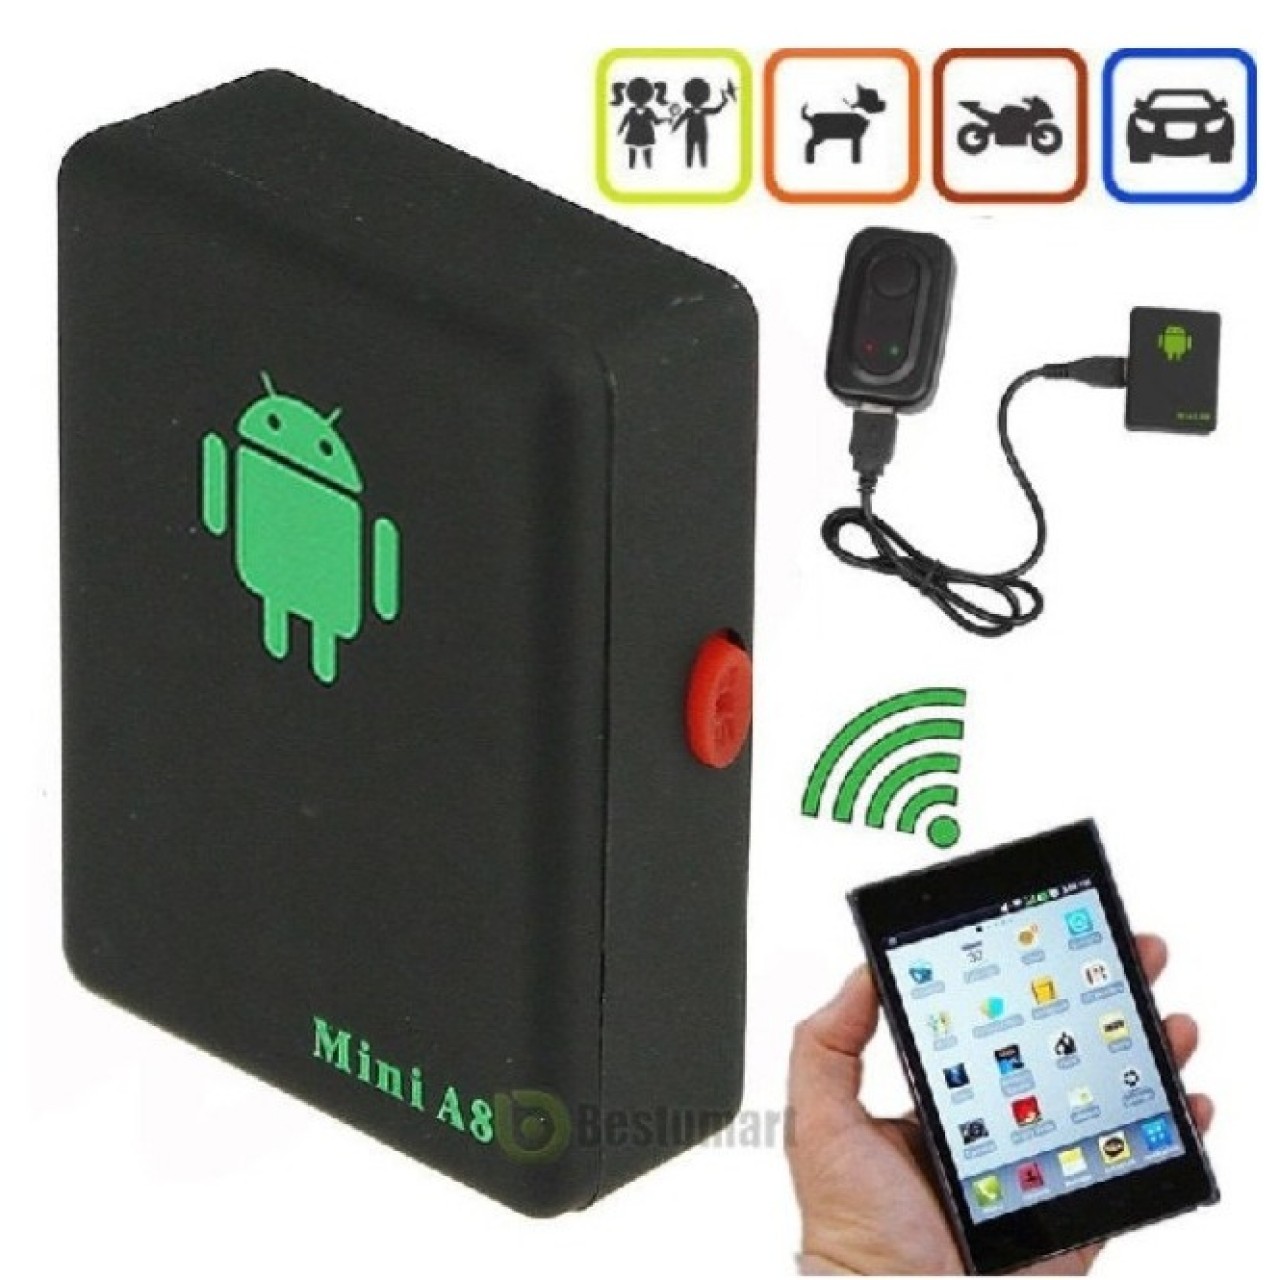 Mini A8 Wireless SPY Room Bug Surveillance Device Audio Tracker